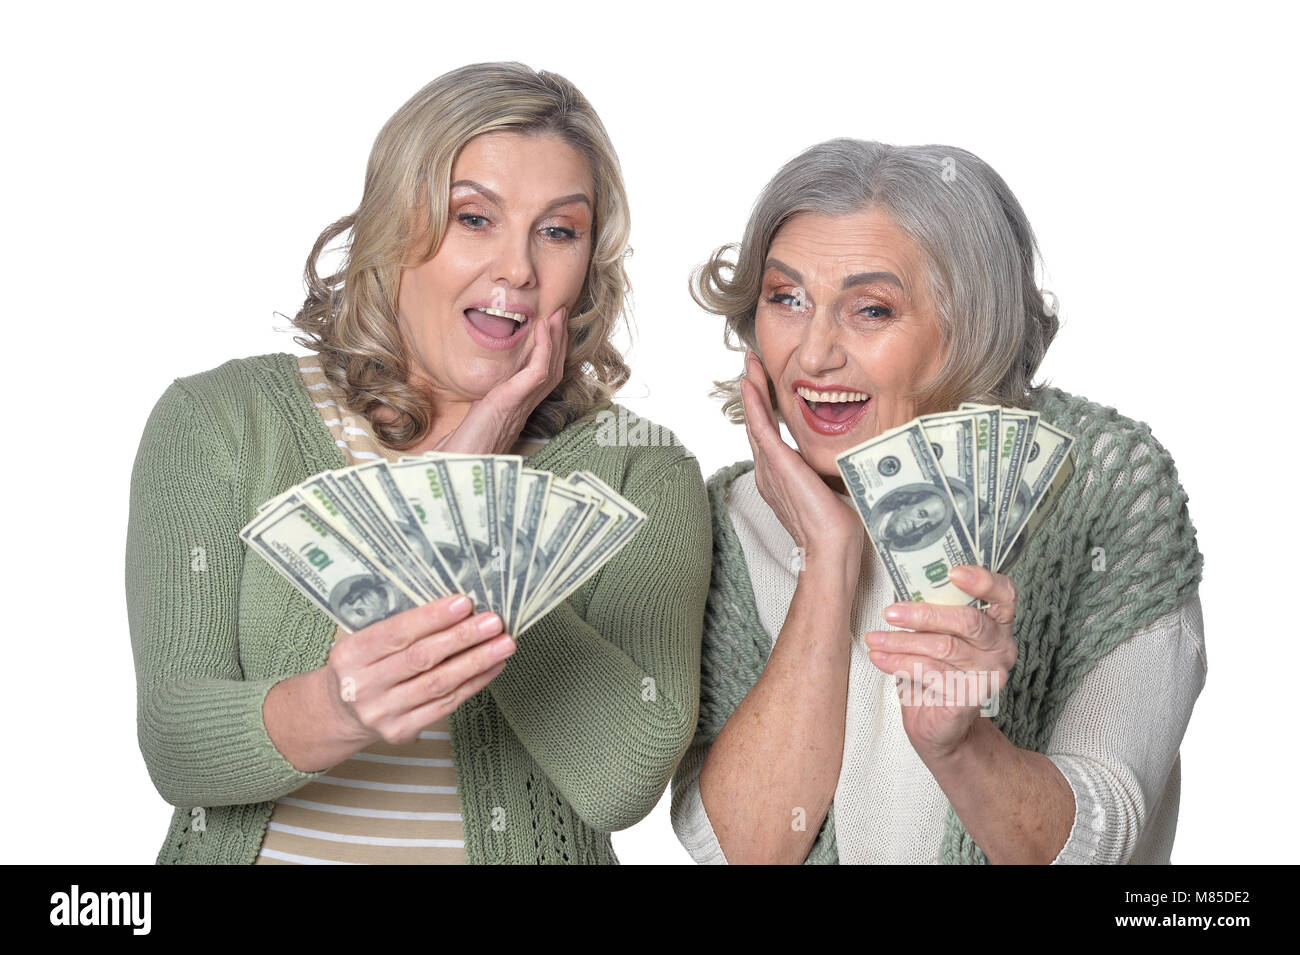 smiling women with money bills Stock Photo